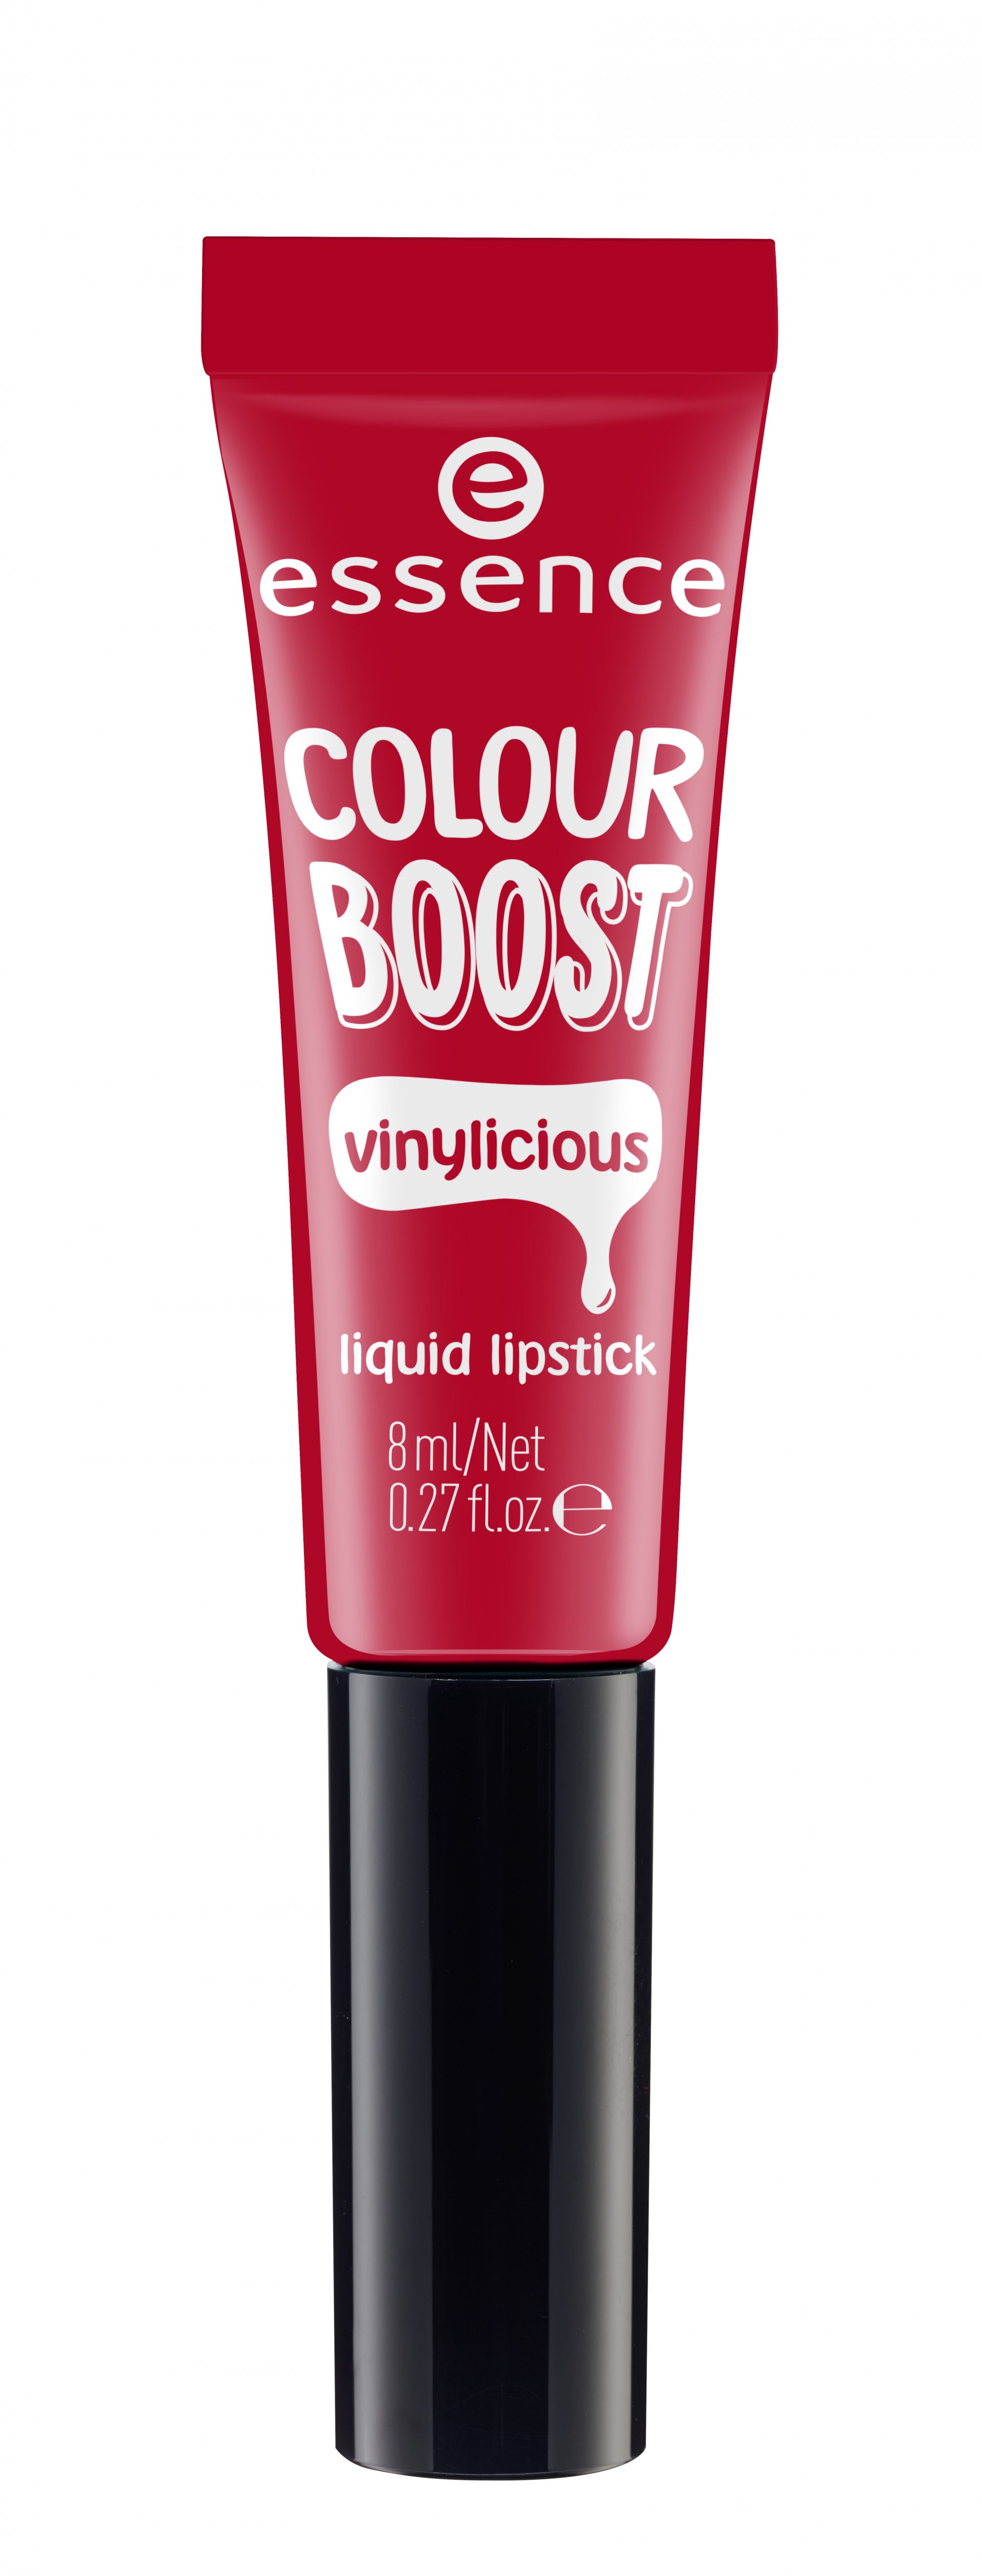 essence colour boost vinylicious liquid lipstick 05 - เอสเซนส์คัลเลอร์บูสท์ไวนิลลิเชียสลิควิดลิปสติก 05